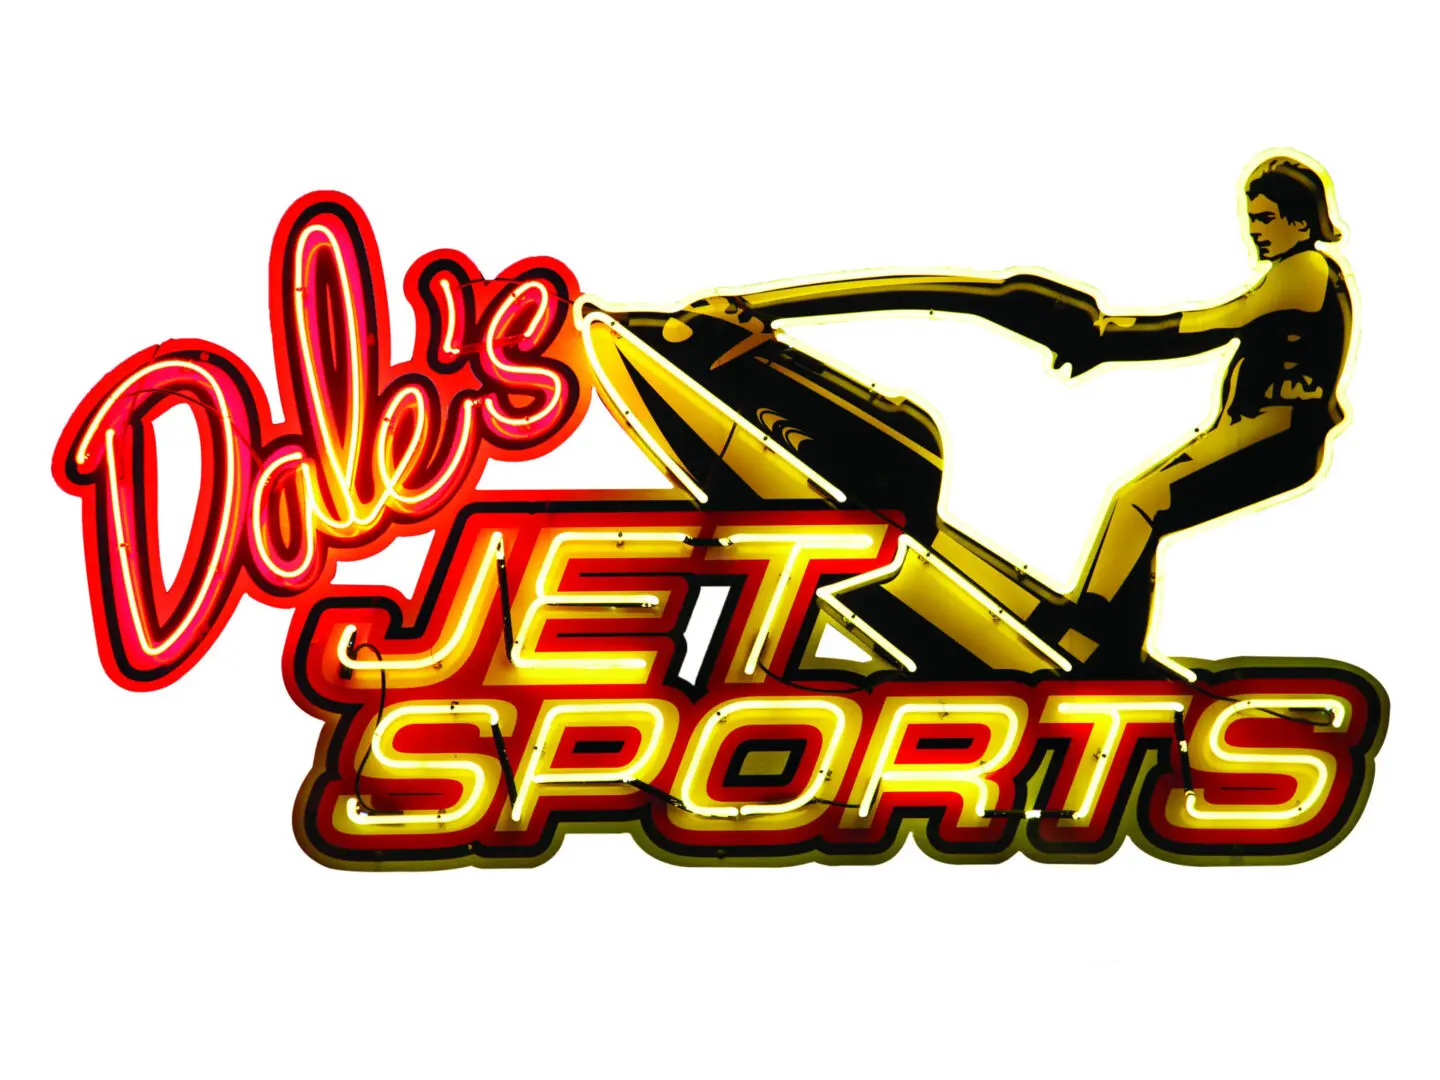 Dale’s Jet Sports